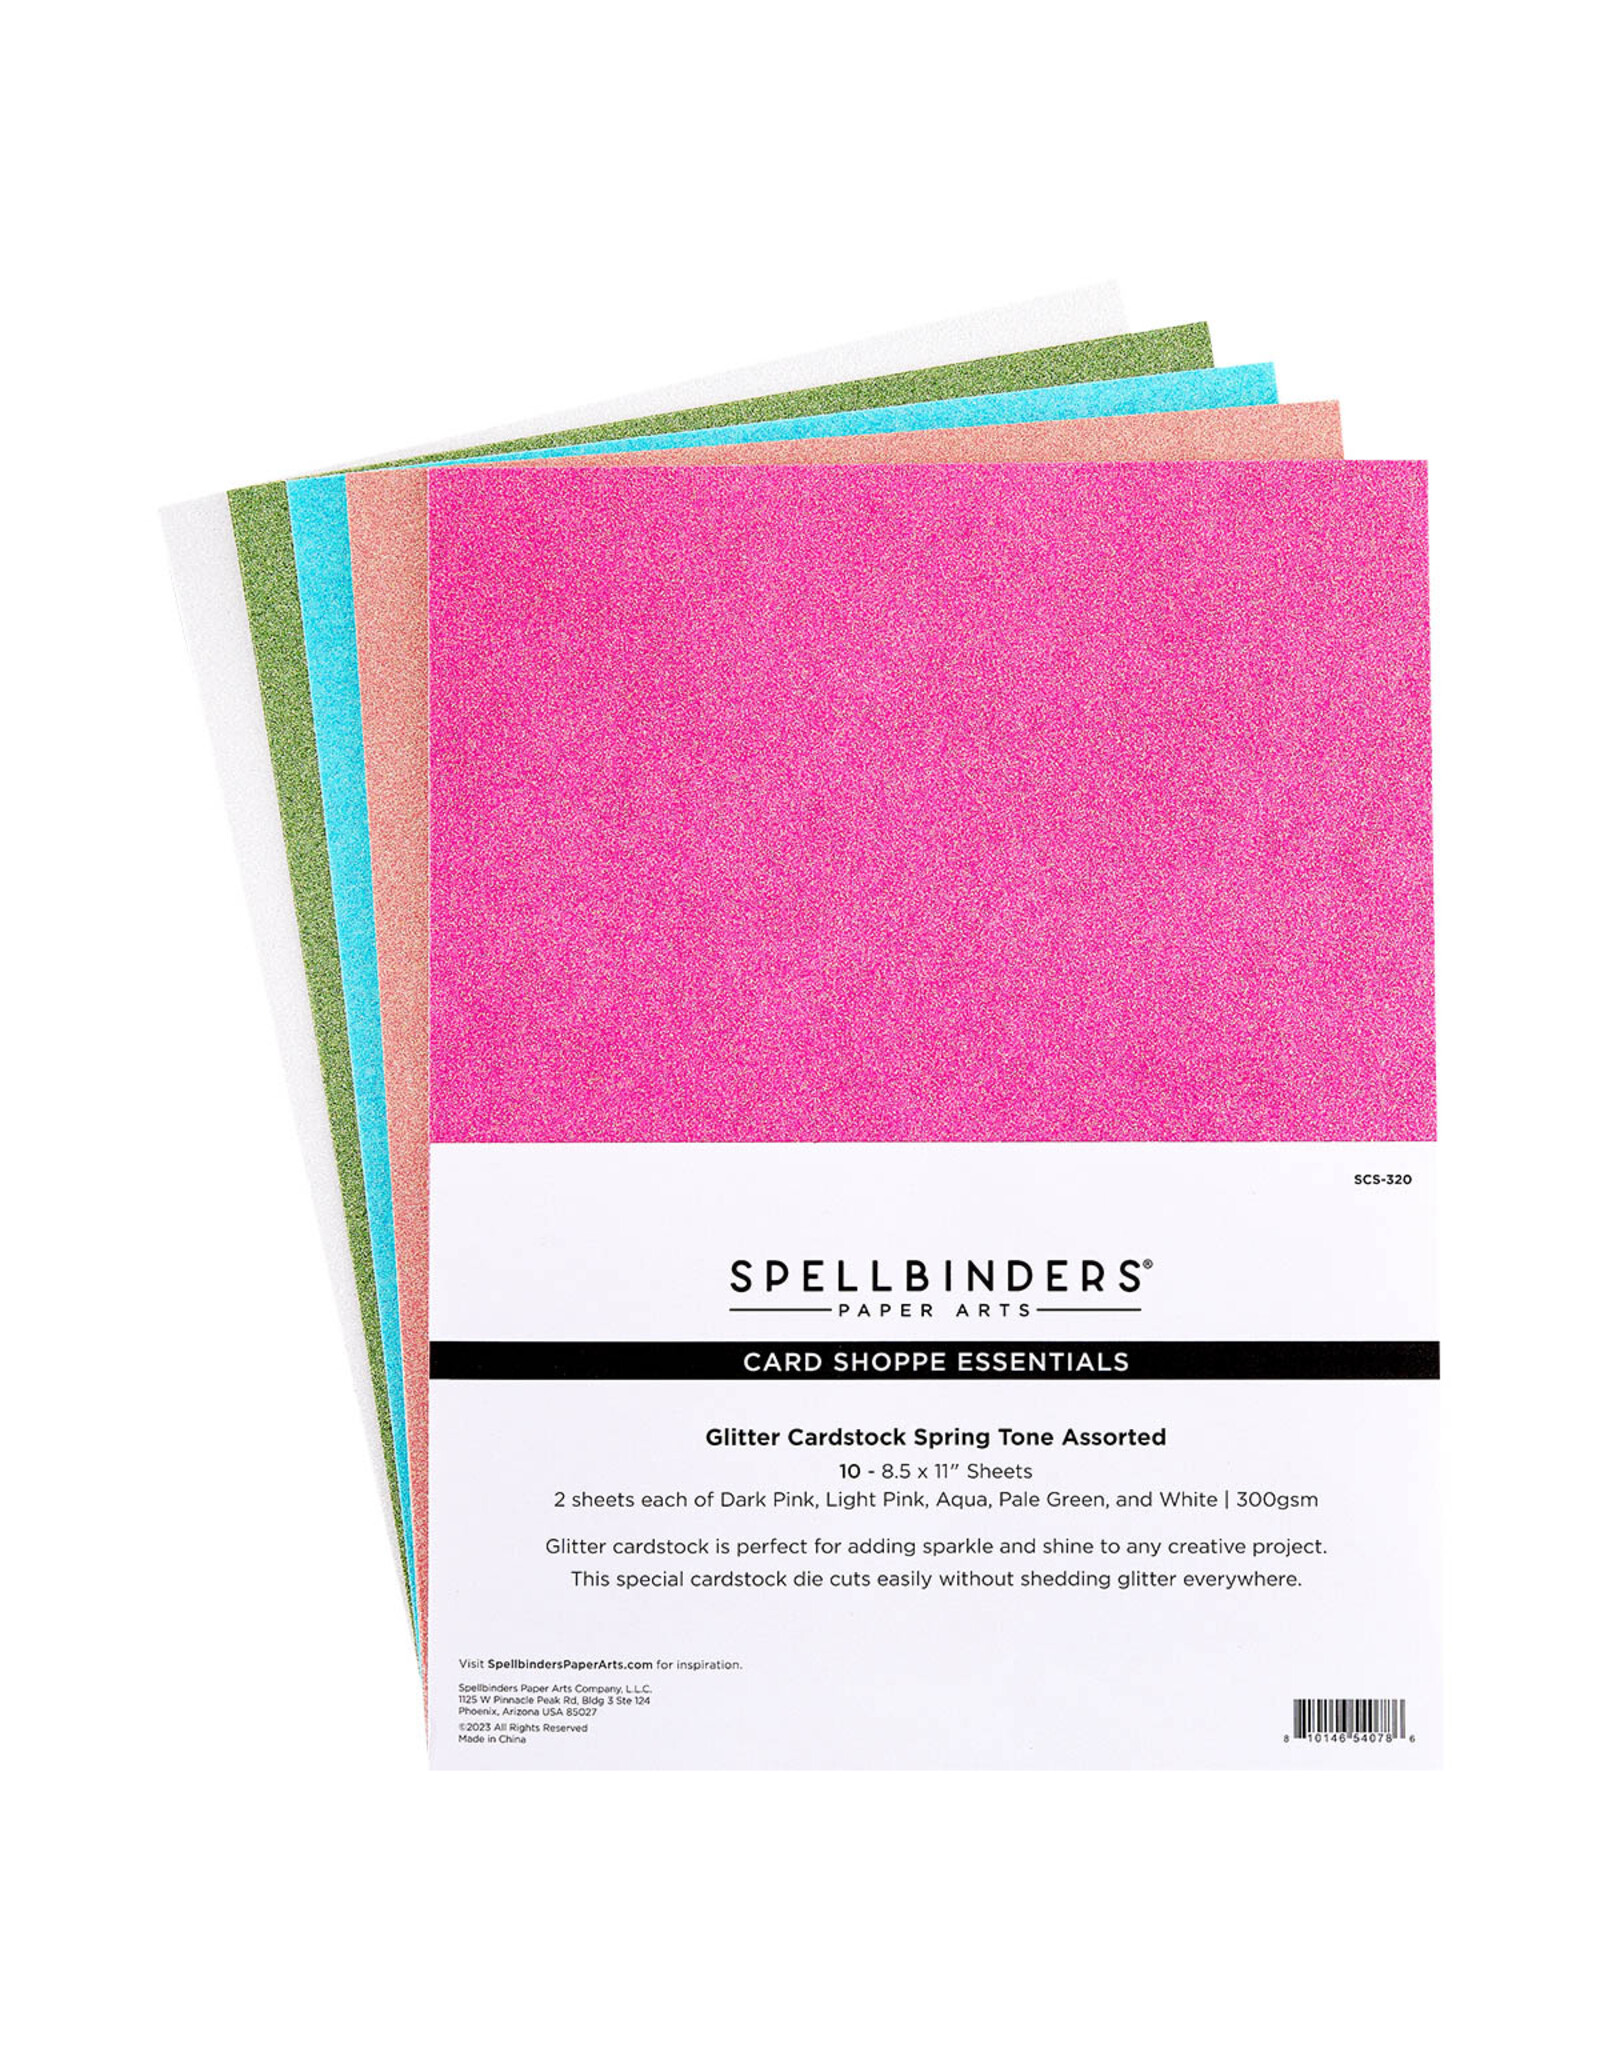 Spellbinders Glitter Cardstock Spring Tone Assorted